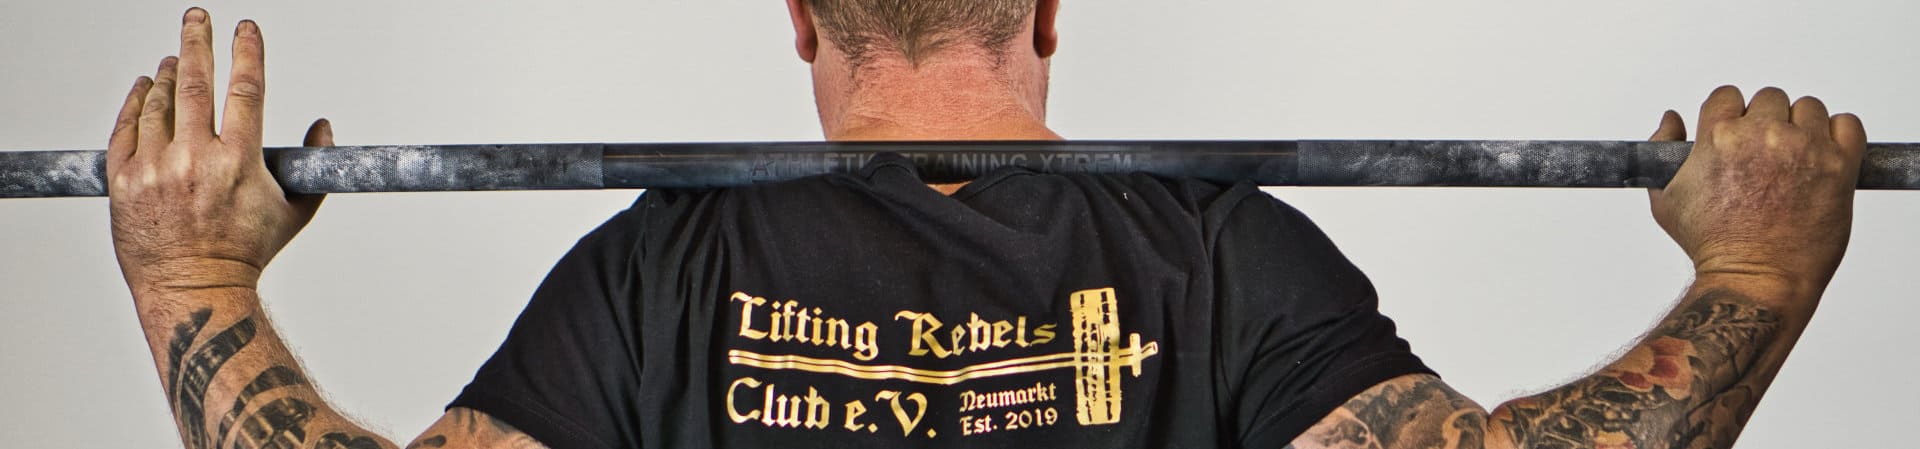 Lifting Rebels Markus Bauer Gewichtheben Neumarkt Title